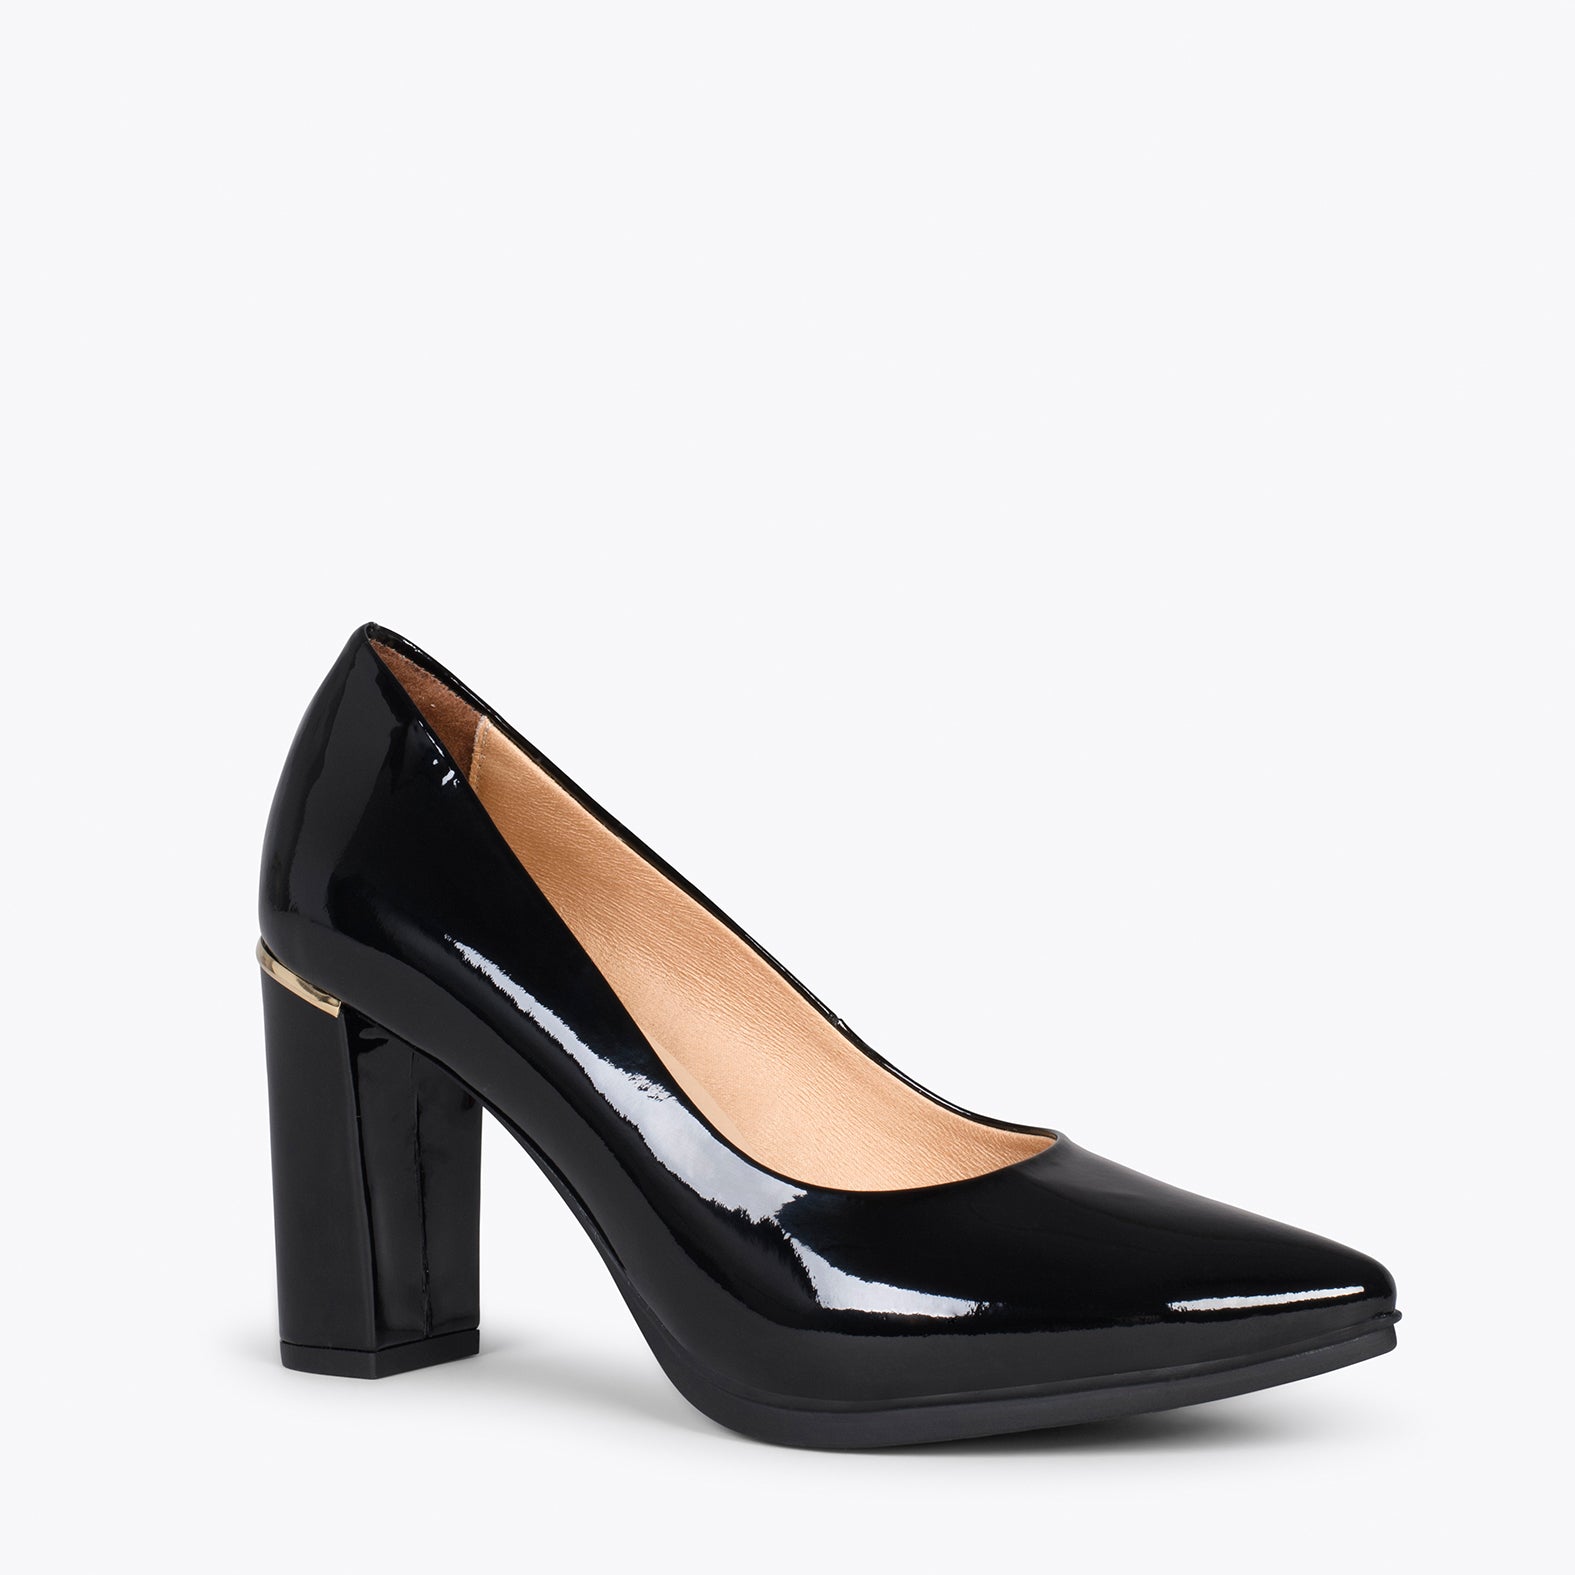 URBAN PATENT – BLACK patent high heels